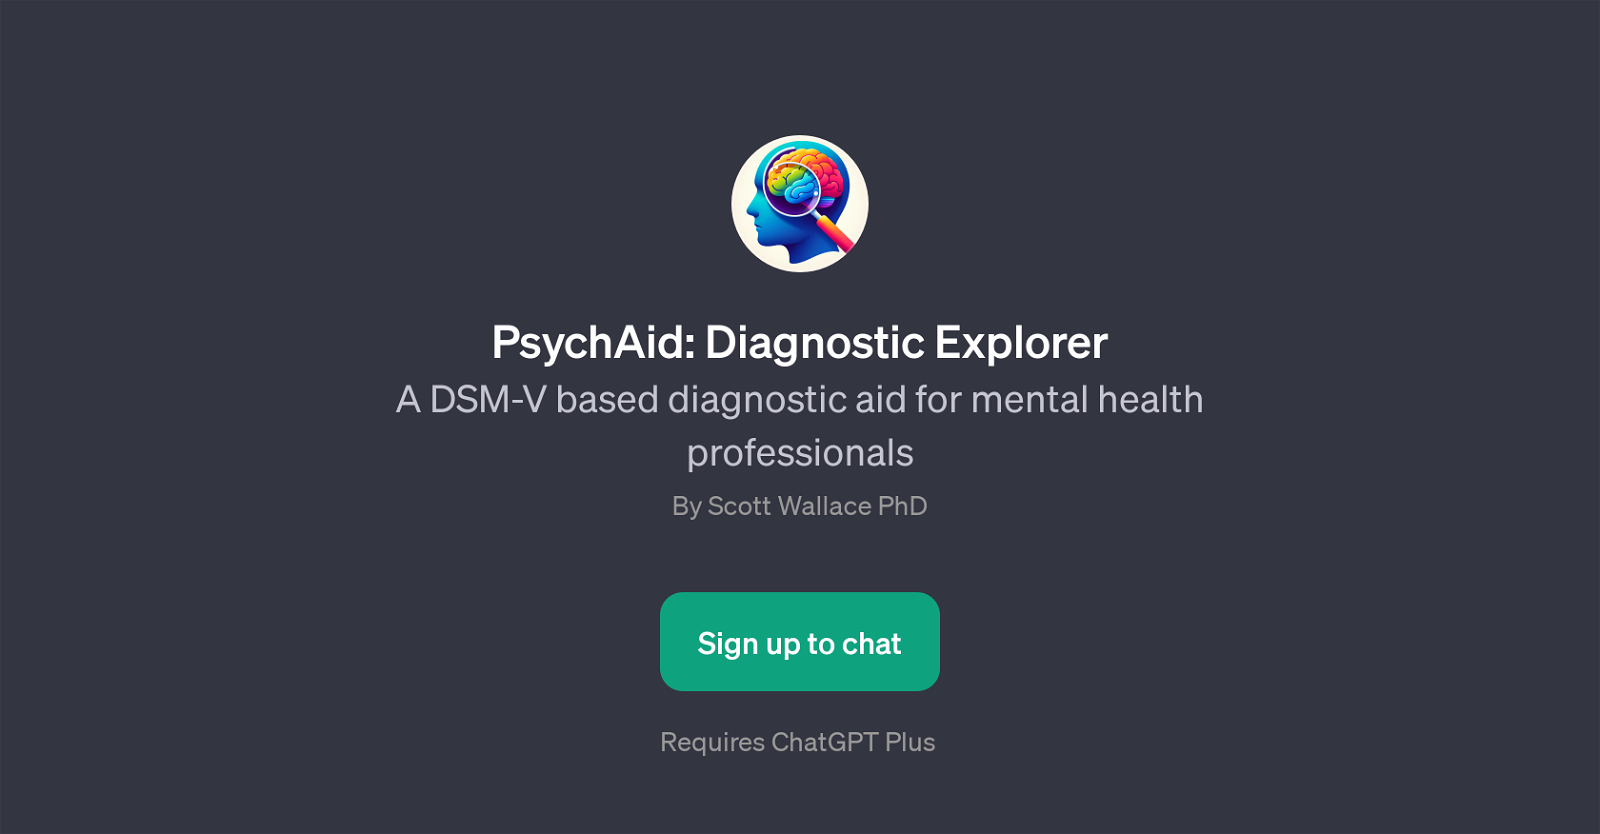 PsychAid: Diagnostic Explorer website